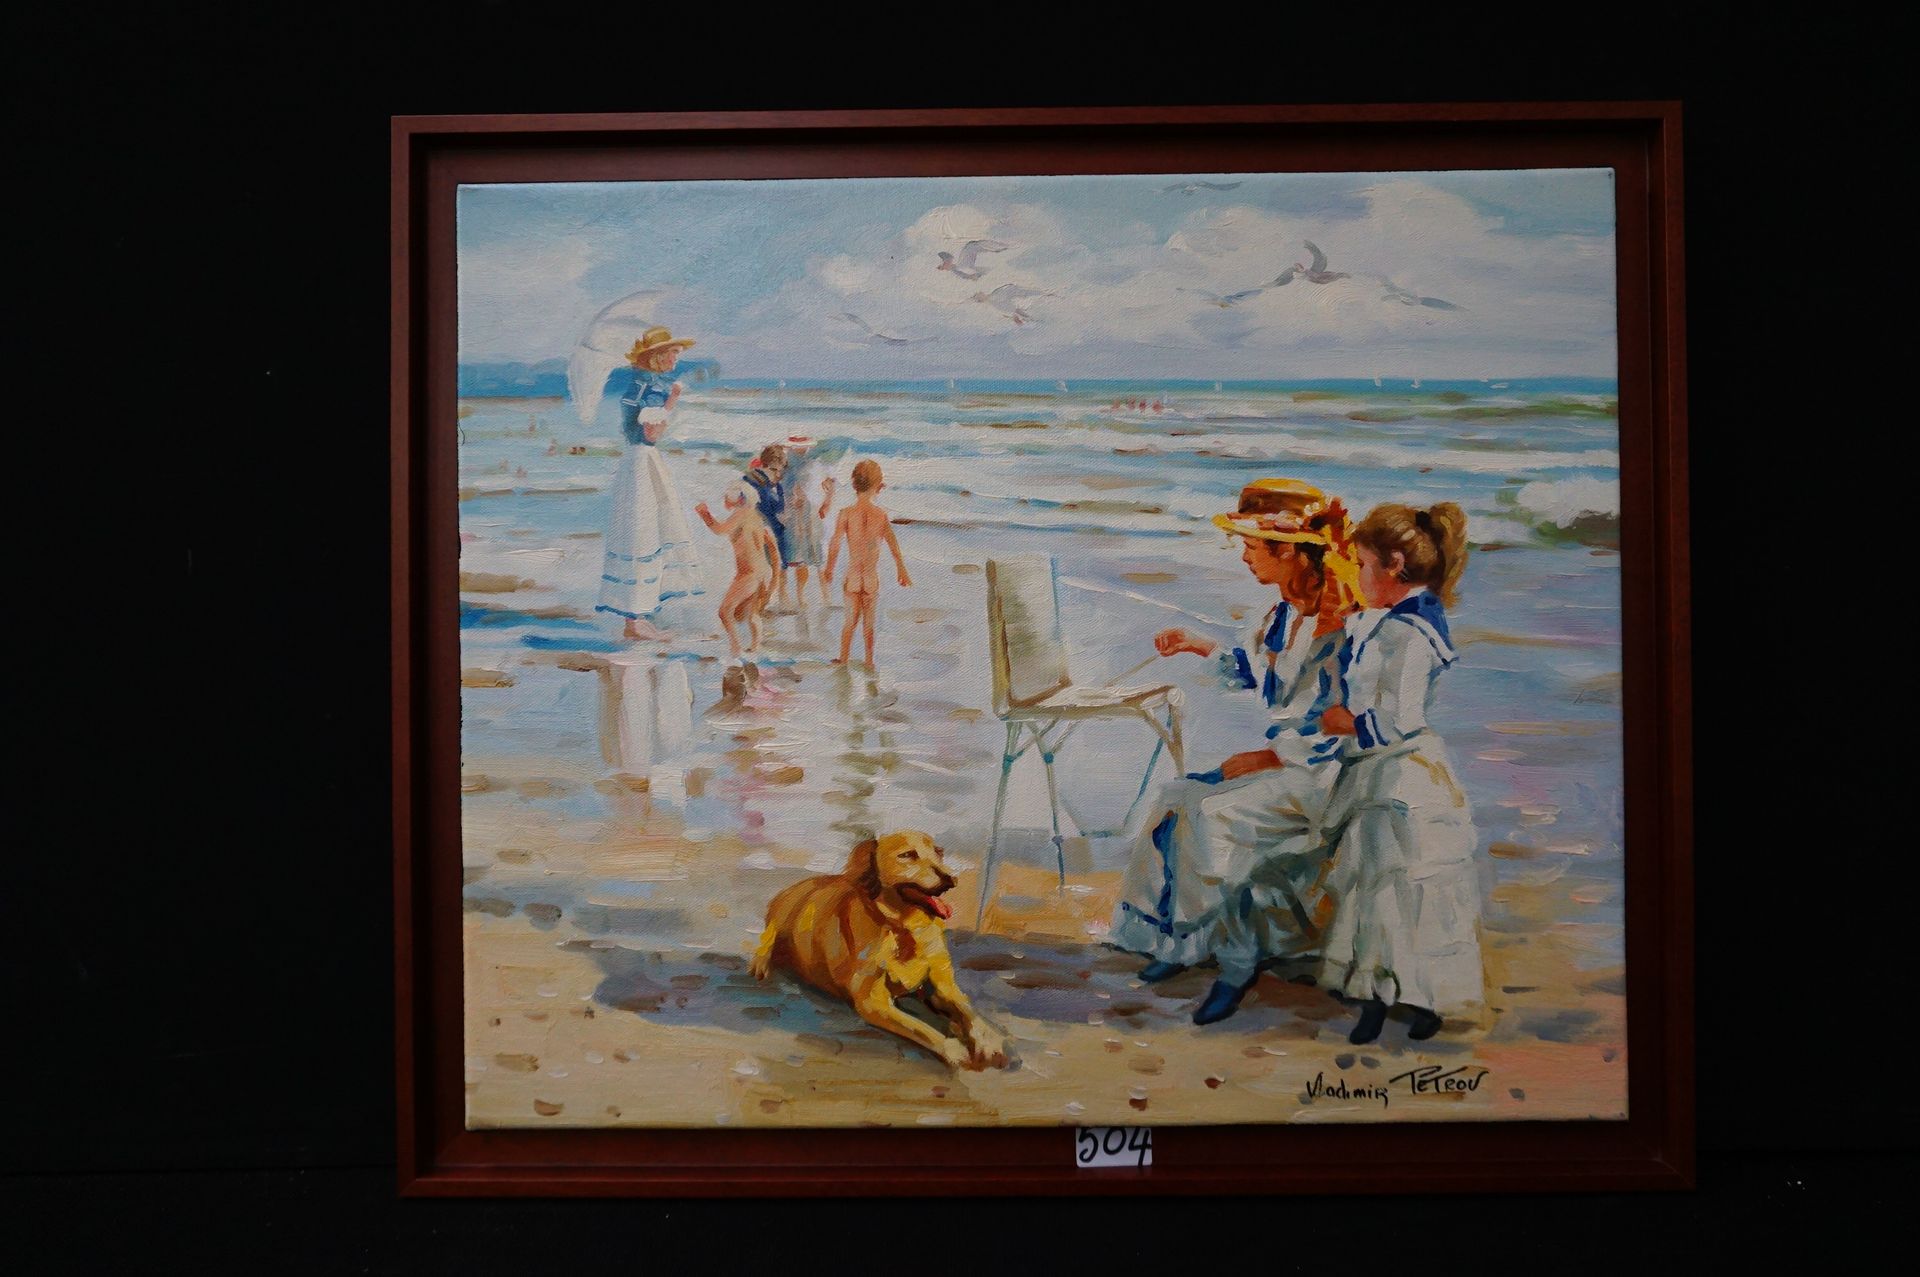 PETROV (1945 - ) "Sunday on the beach" - Oil on canvas - Signed - 50 x 60 cm